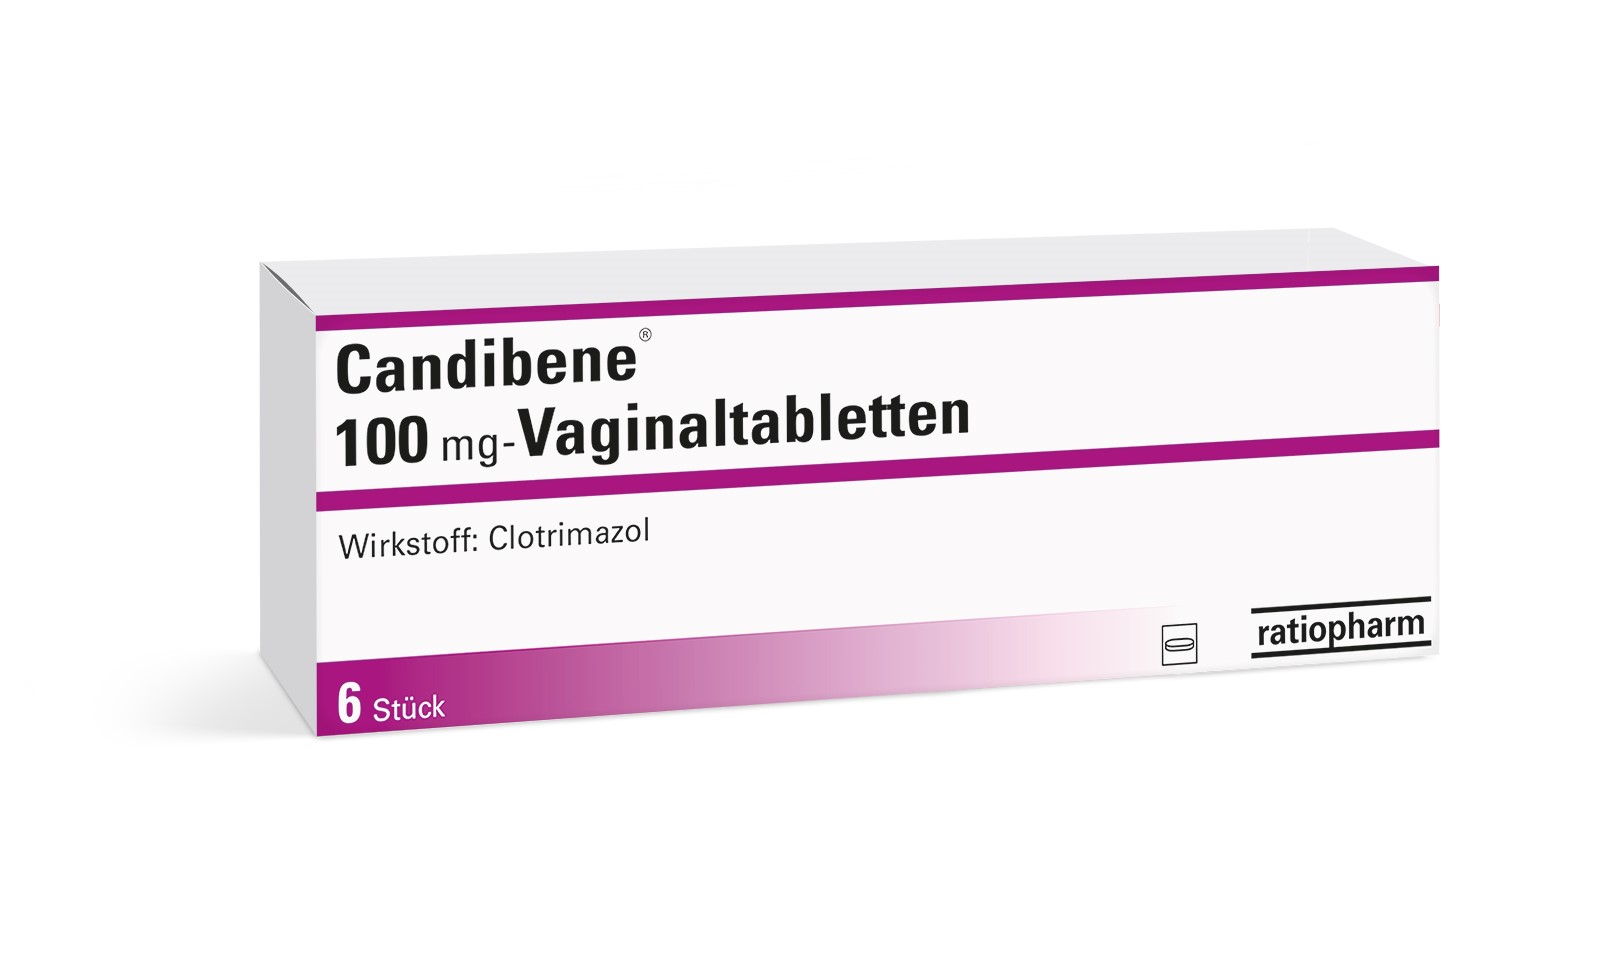 Candibene® 100 mg - Vaginaltabletten